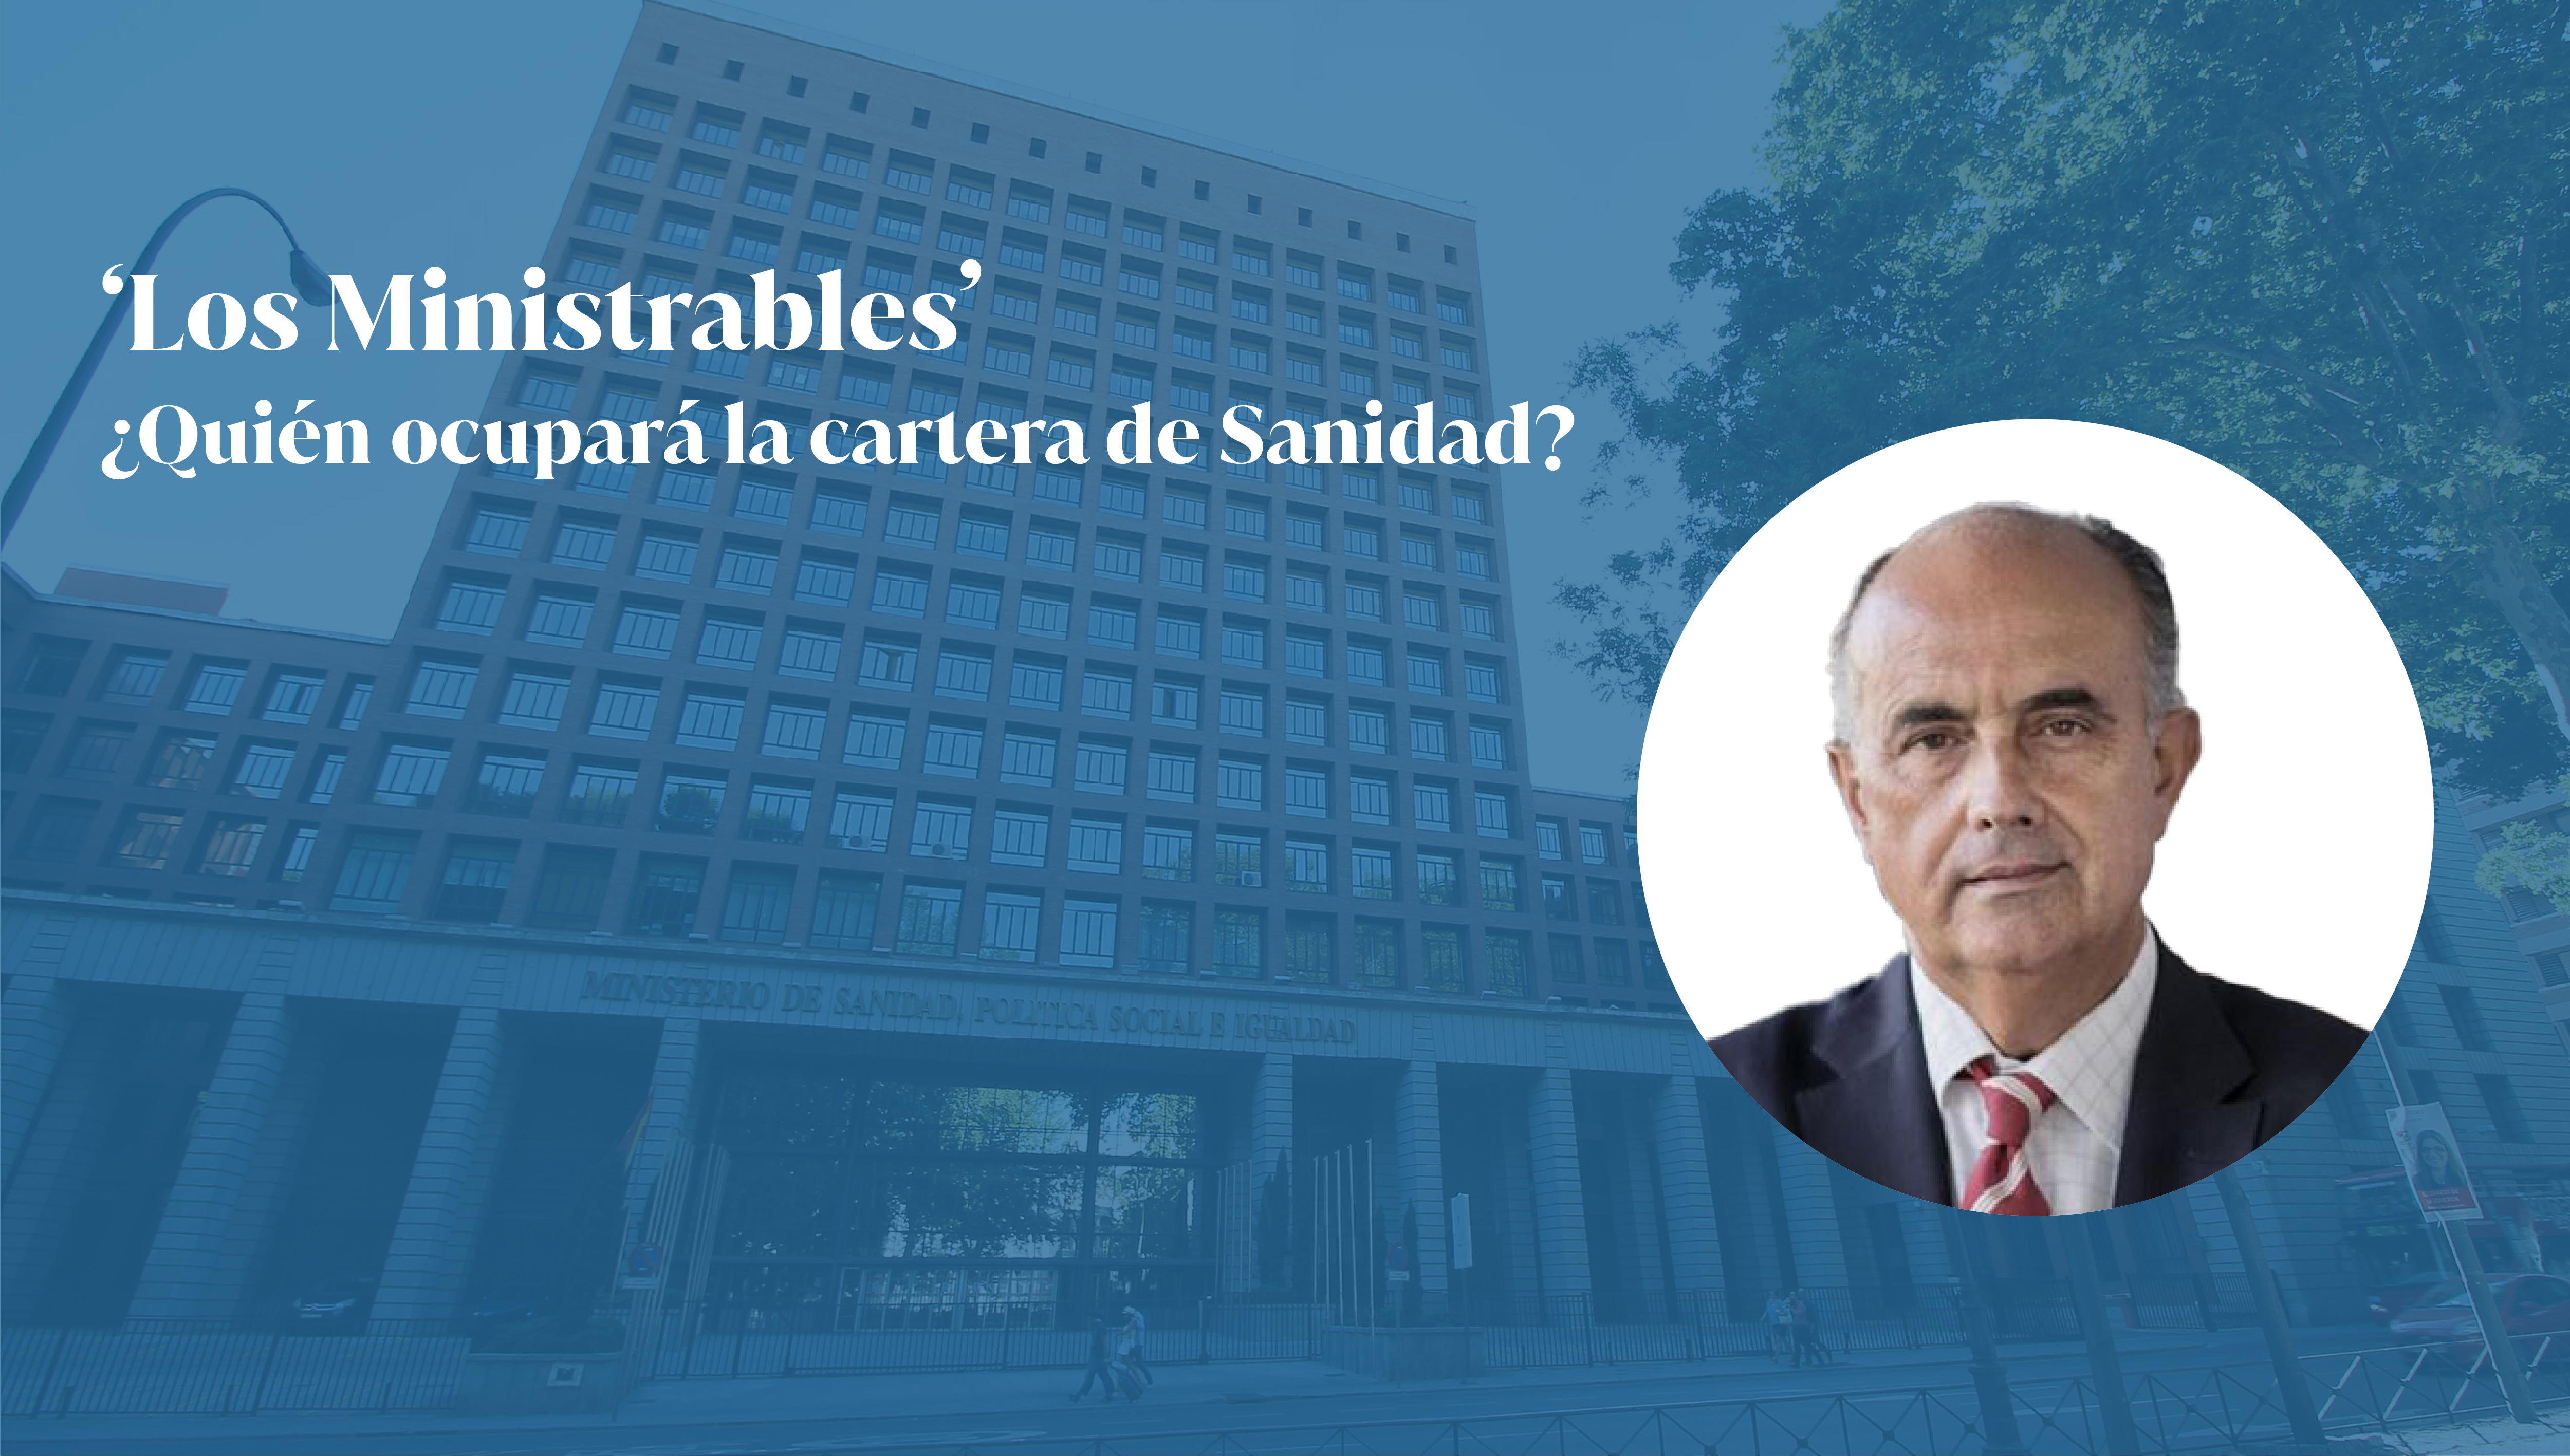 ‘Los ministrables’: Antonio Zapatero